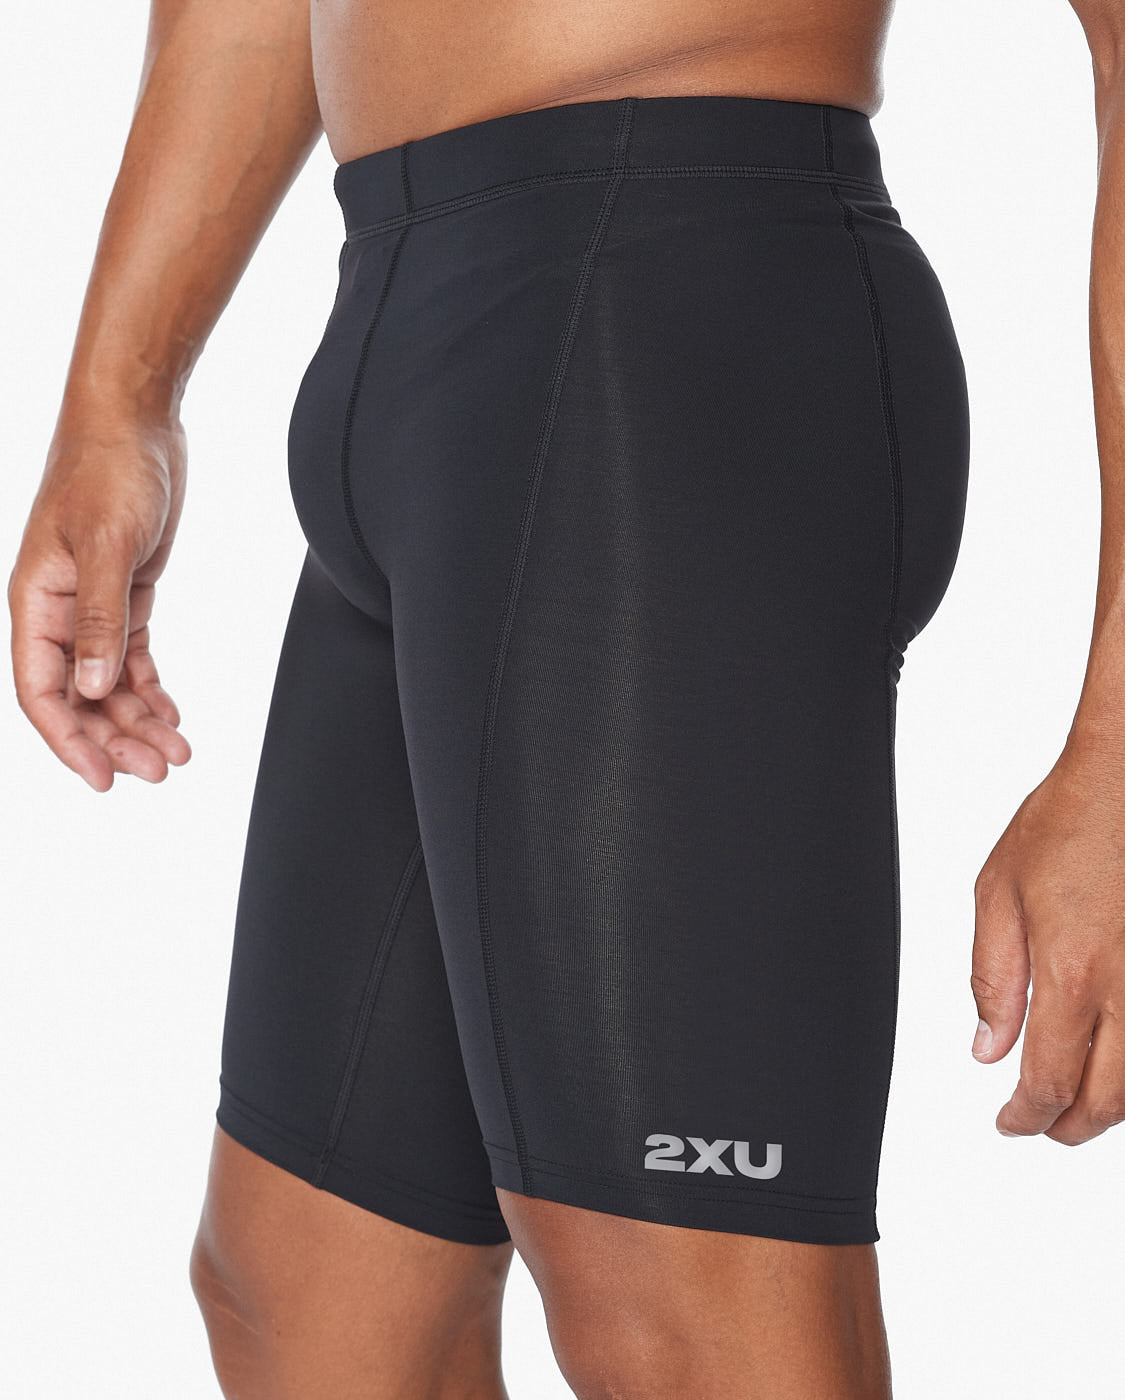 2XU South Africa - Men's Core Compression Shorts - Black - Black/Silver